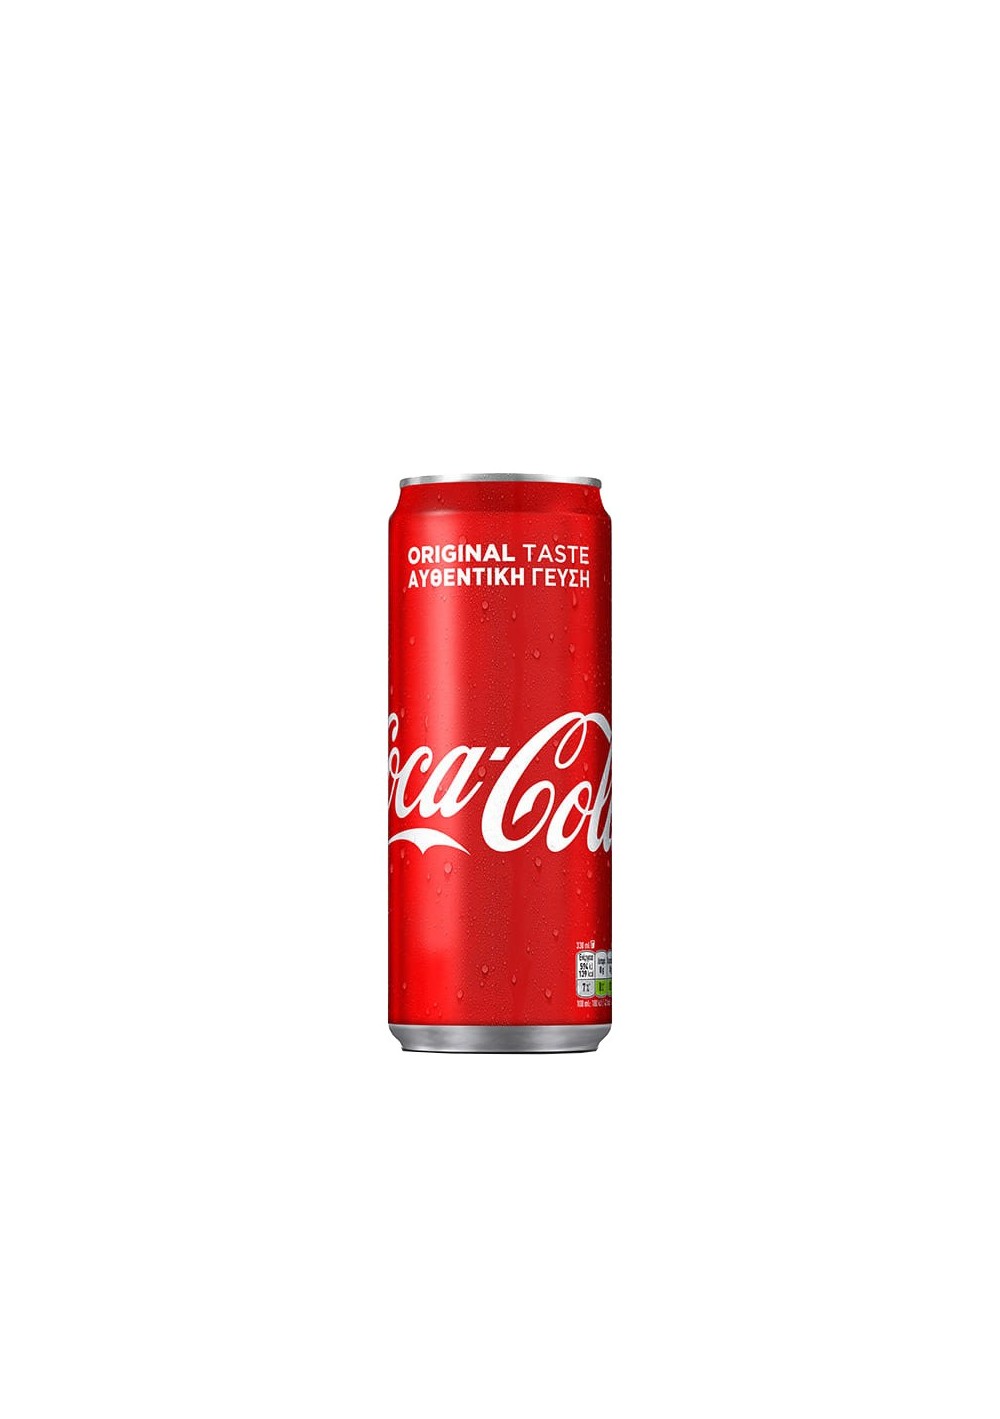 https://www.fileloinon.gr/18521-large_default/050-72000-Coca-Cola.jpg